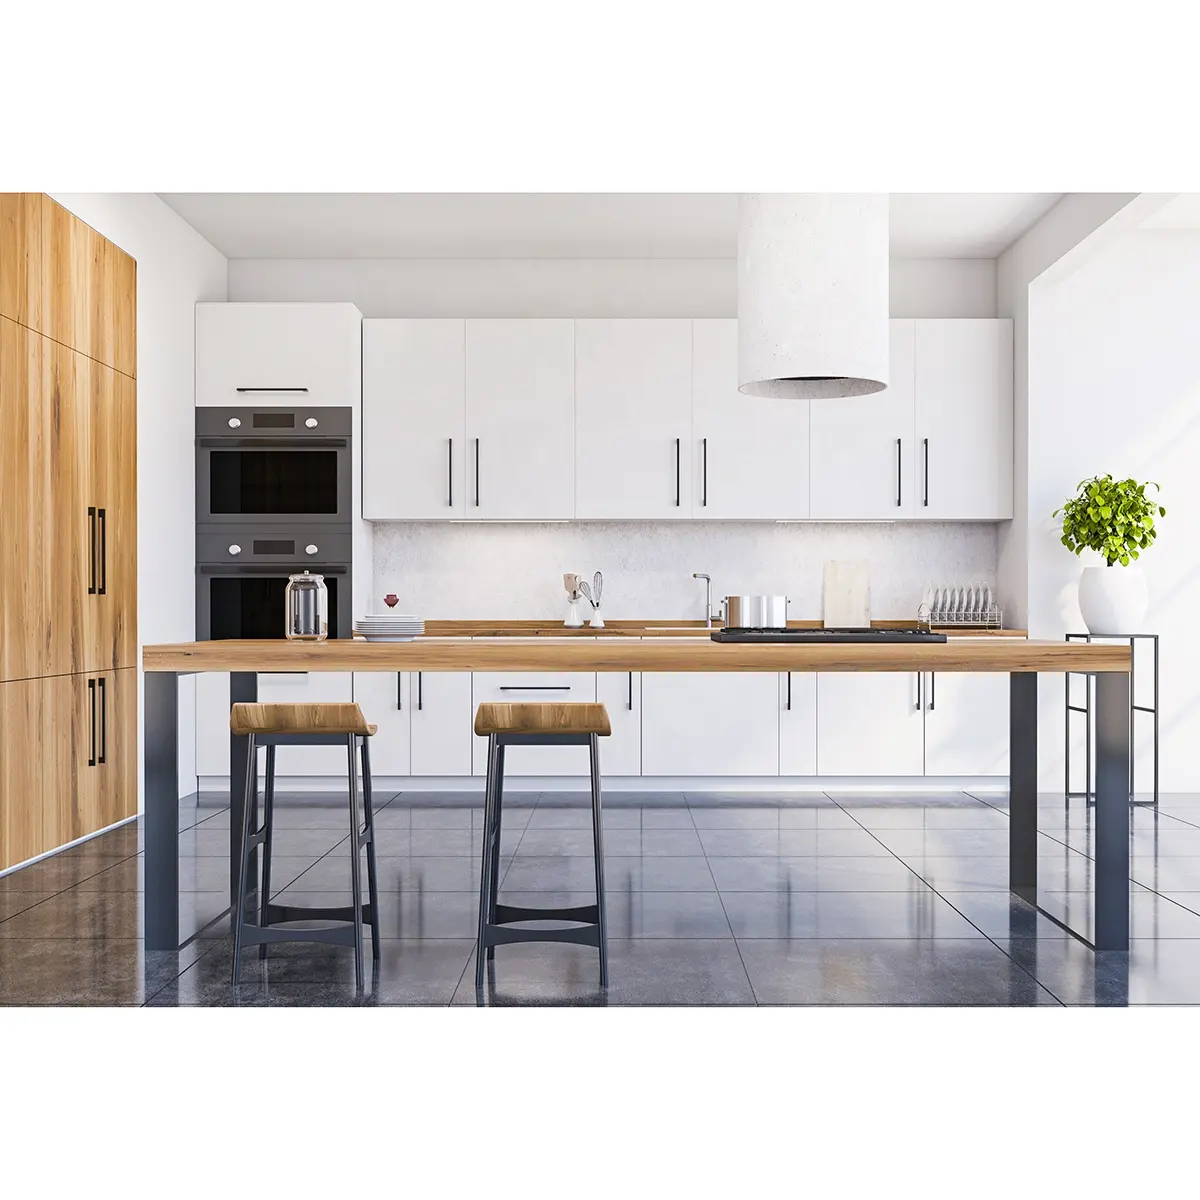 Set di armadietti per la cucina semplice e pulita con lacca bianca opaca moderna